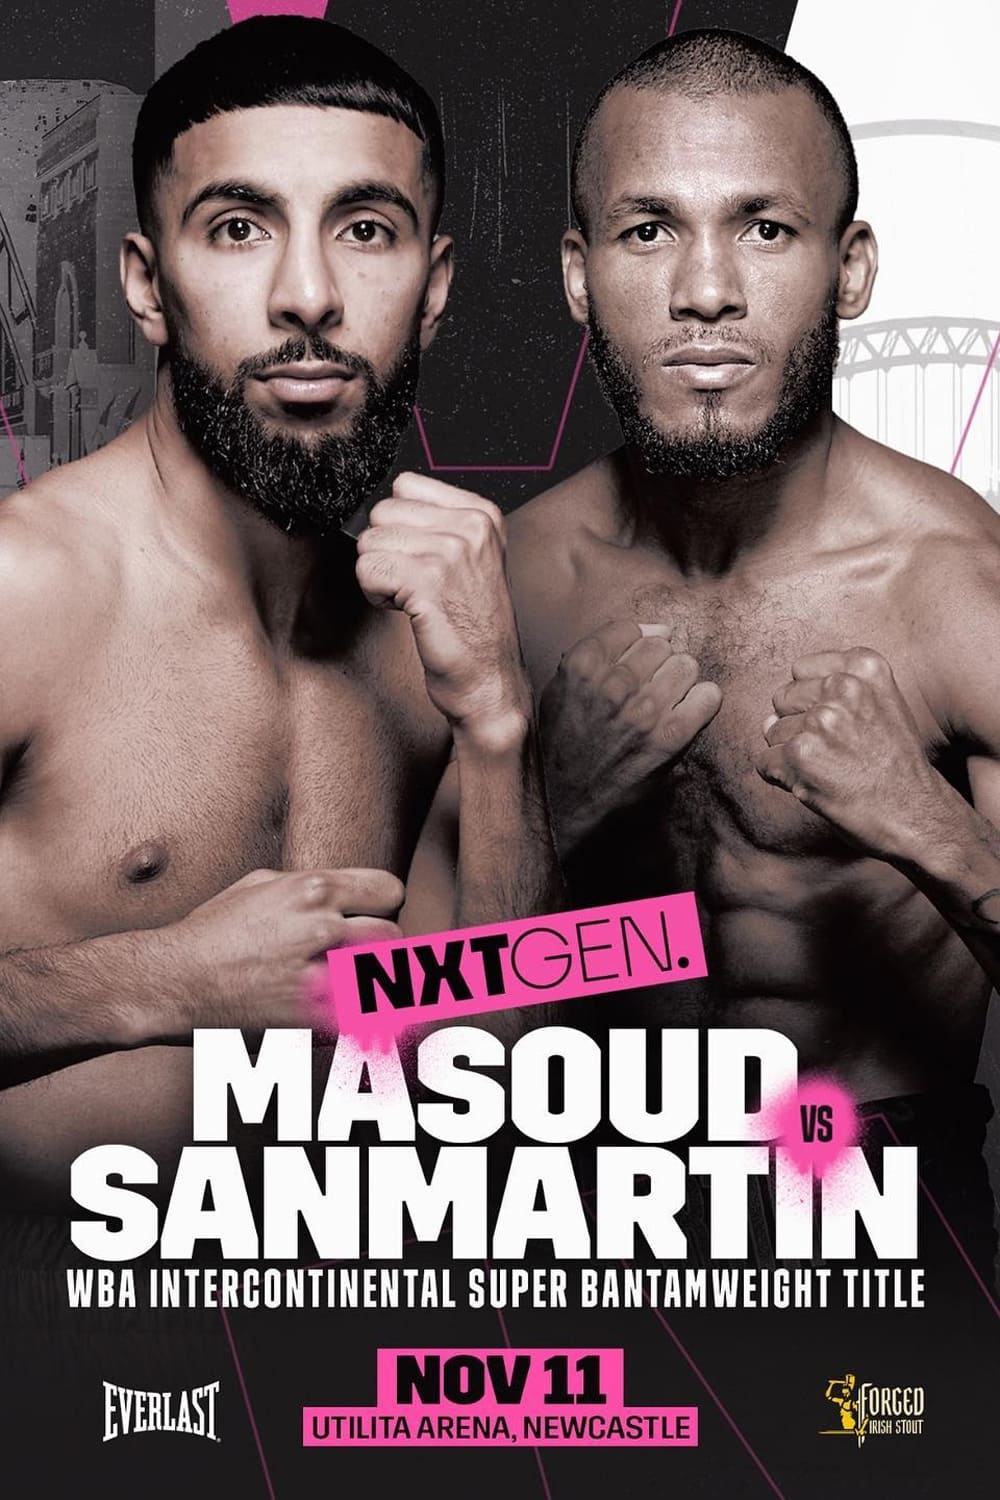 Shabaz Masoud vs. Jose Sanmartin